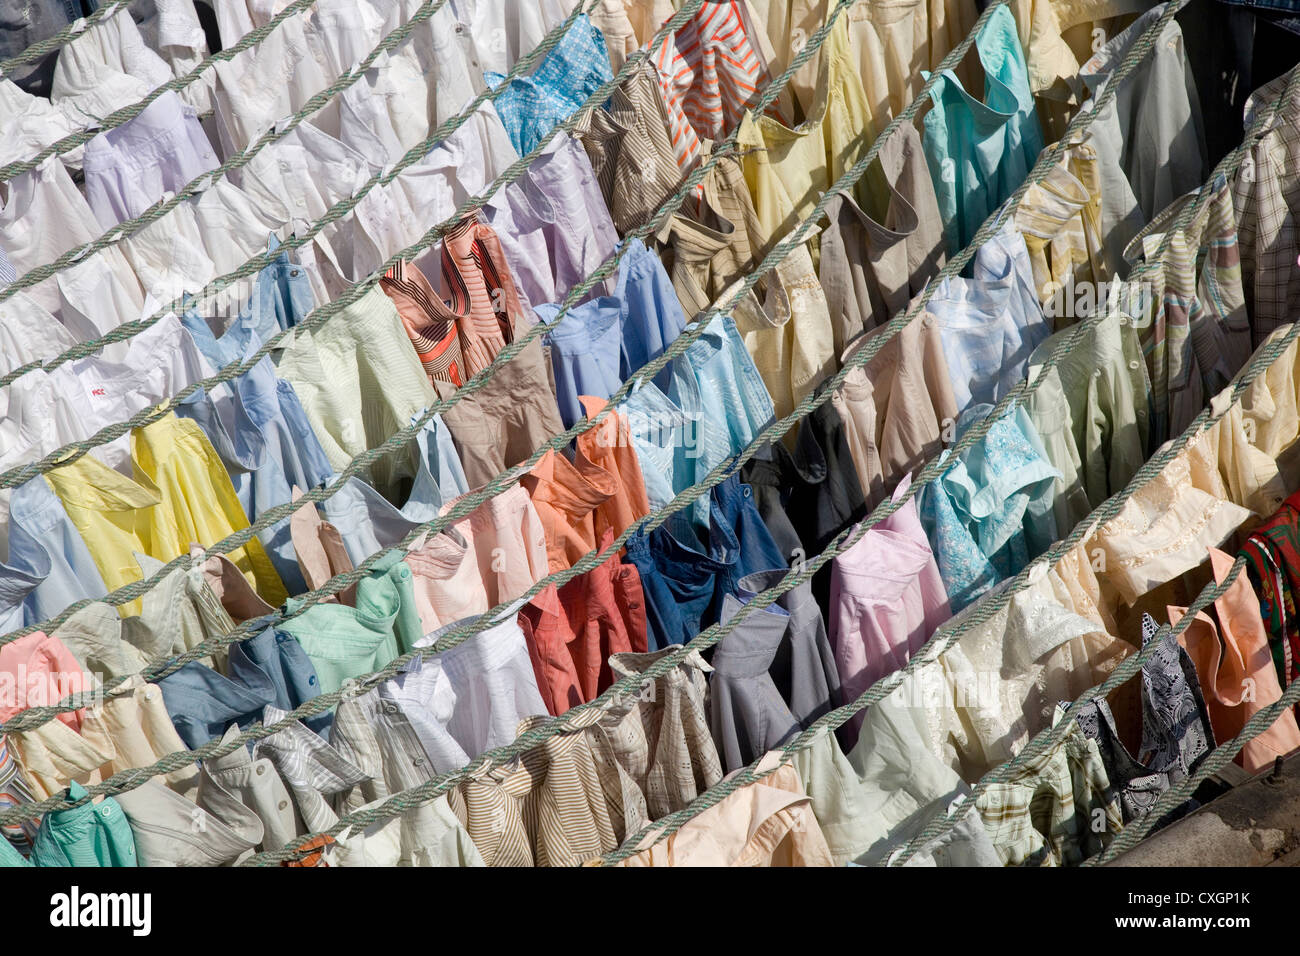 Colourful shirts hanging to dry at Dhobi Ghats central laundry, Mumbai, India. Stock Photo